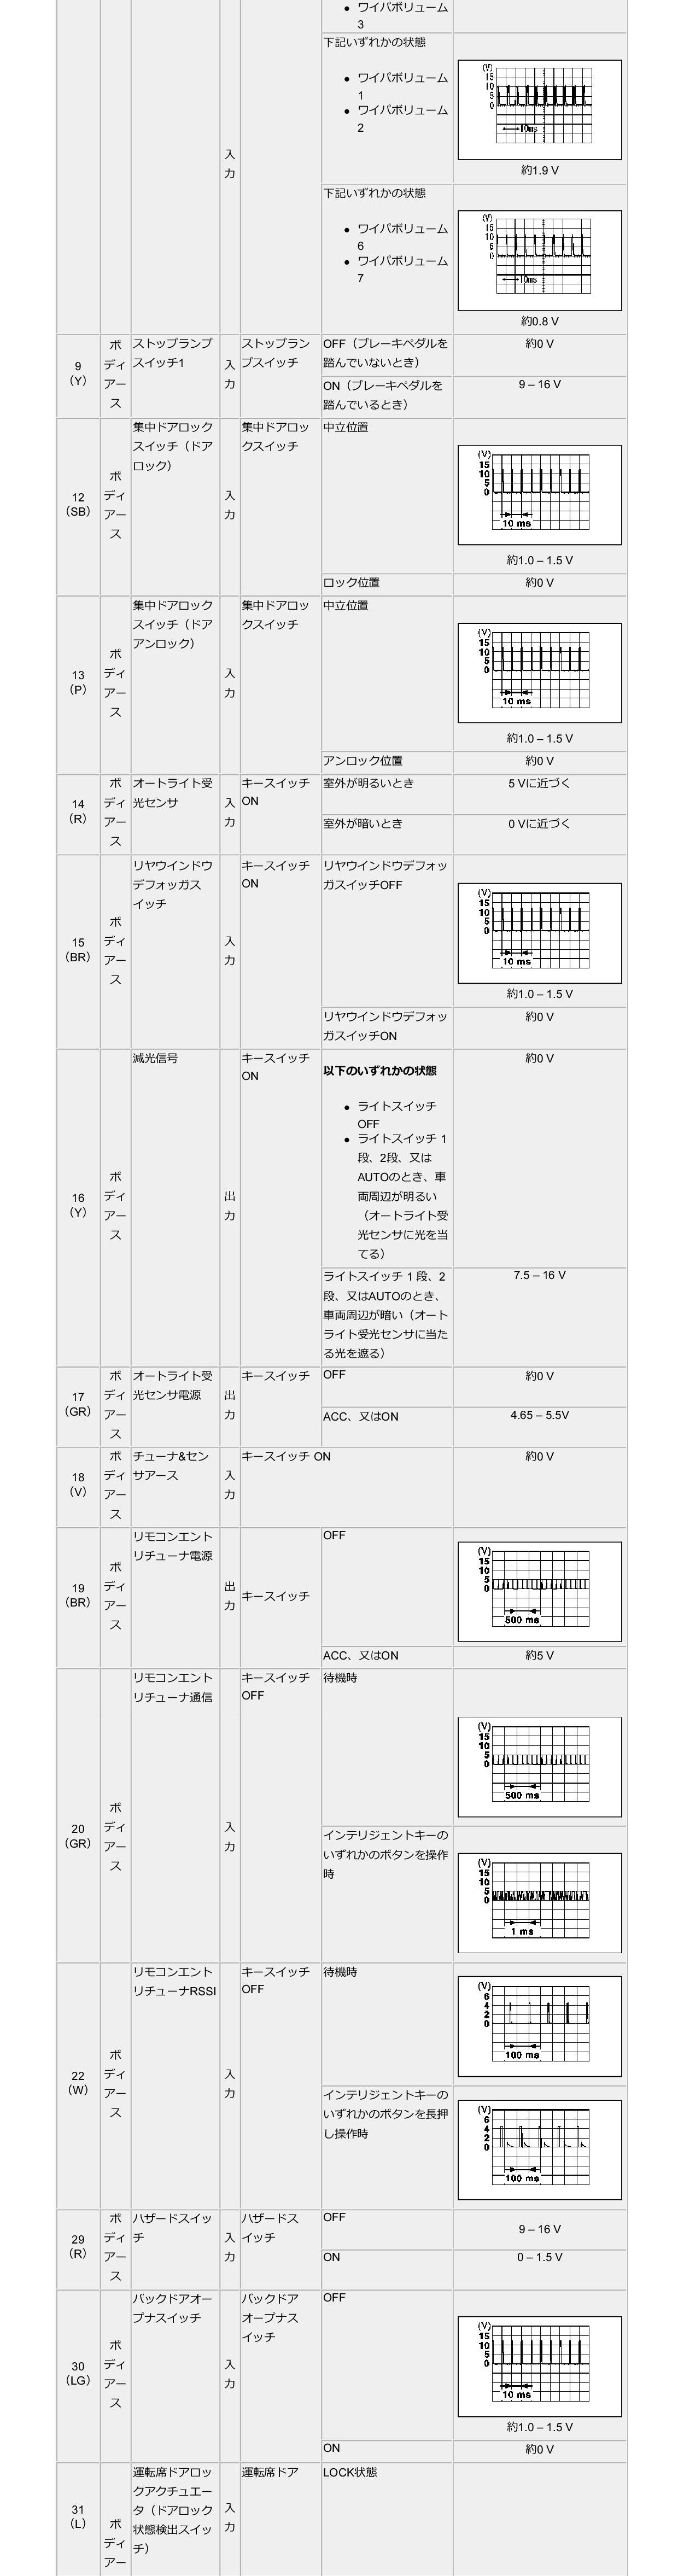 Hfc26 セレナ m Bodycontrolmodule の端子配列を確認してみよう 15 03 24 Diy実践日記